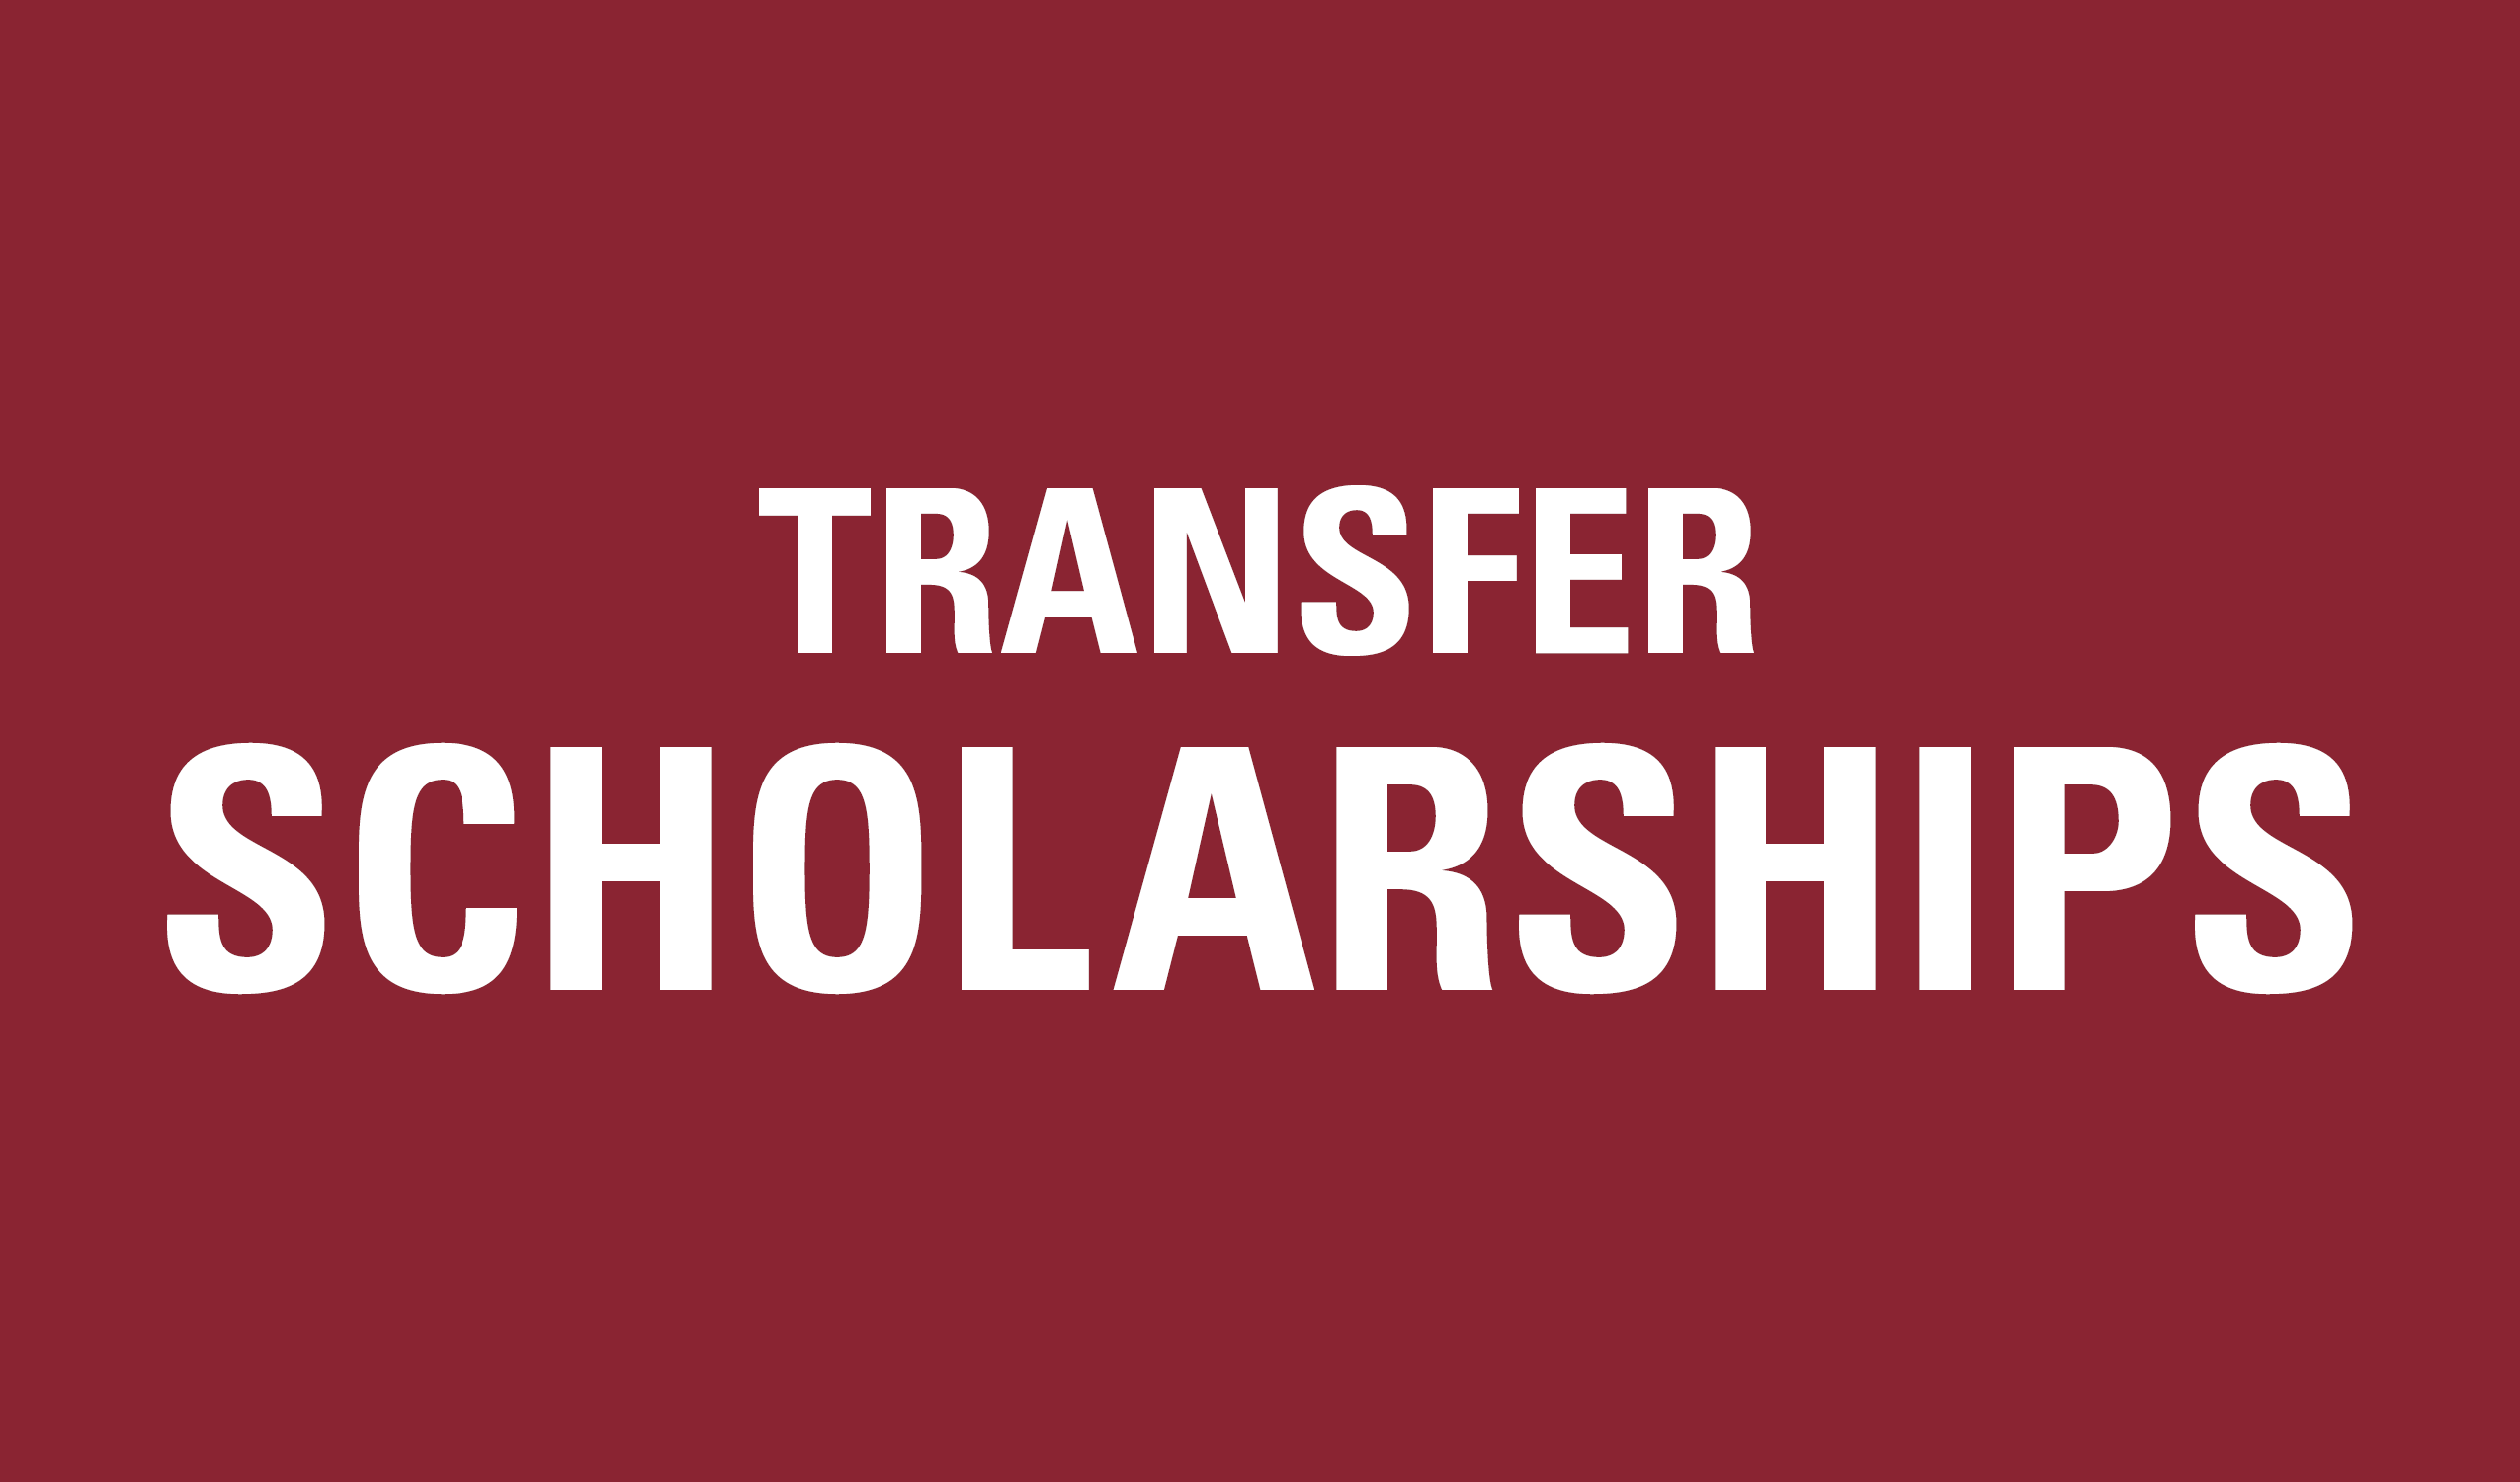 Transfer Scholarships